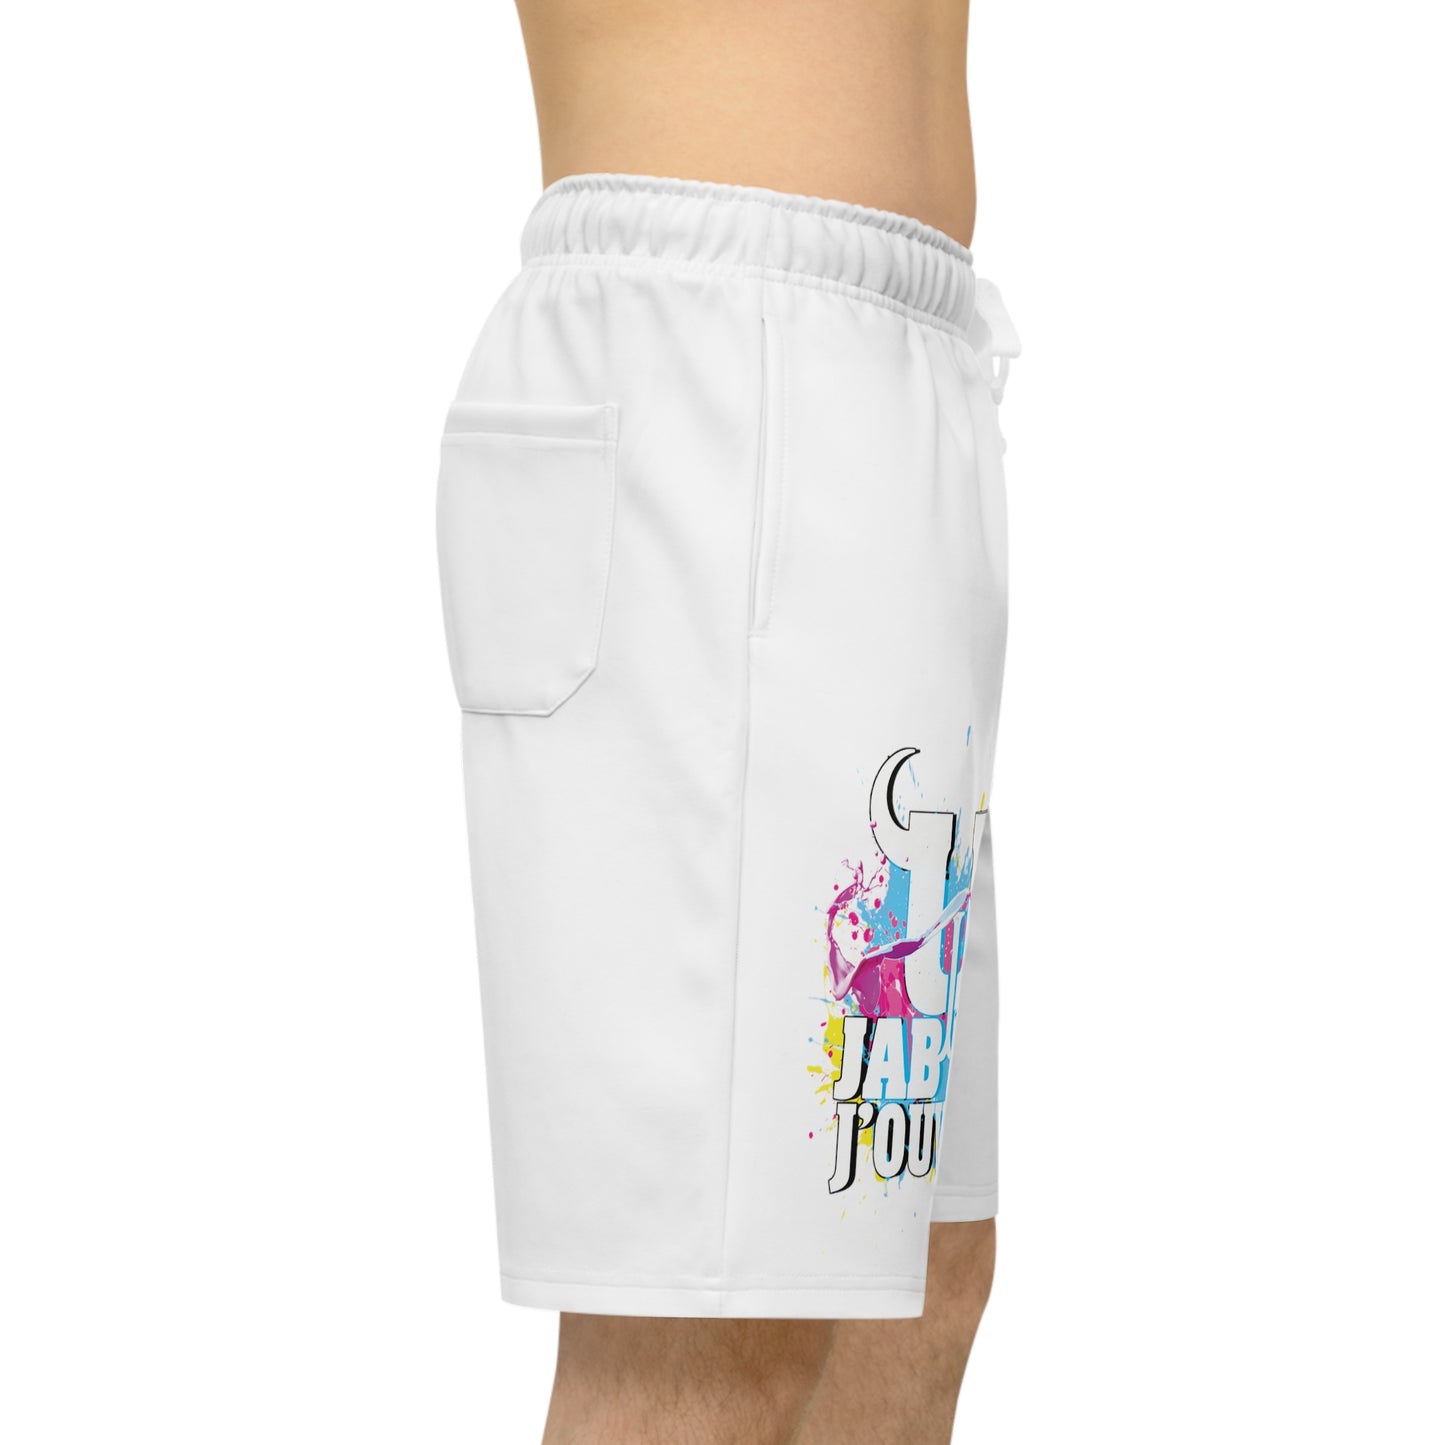 Jab Jab J'Ouvert Athletic Long Shorts